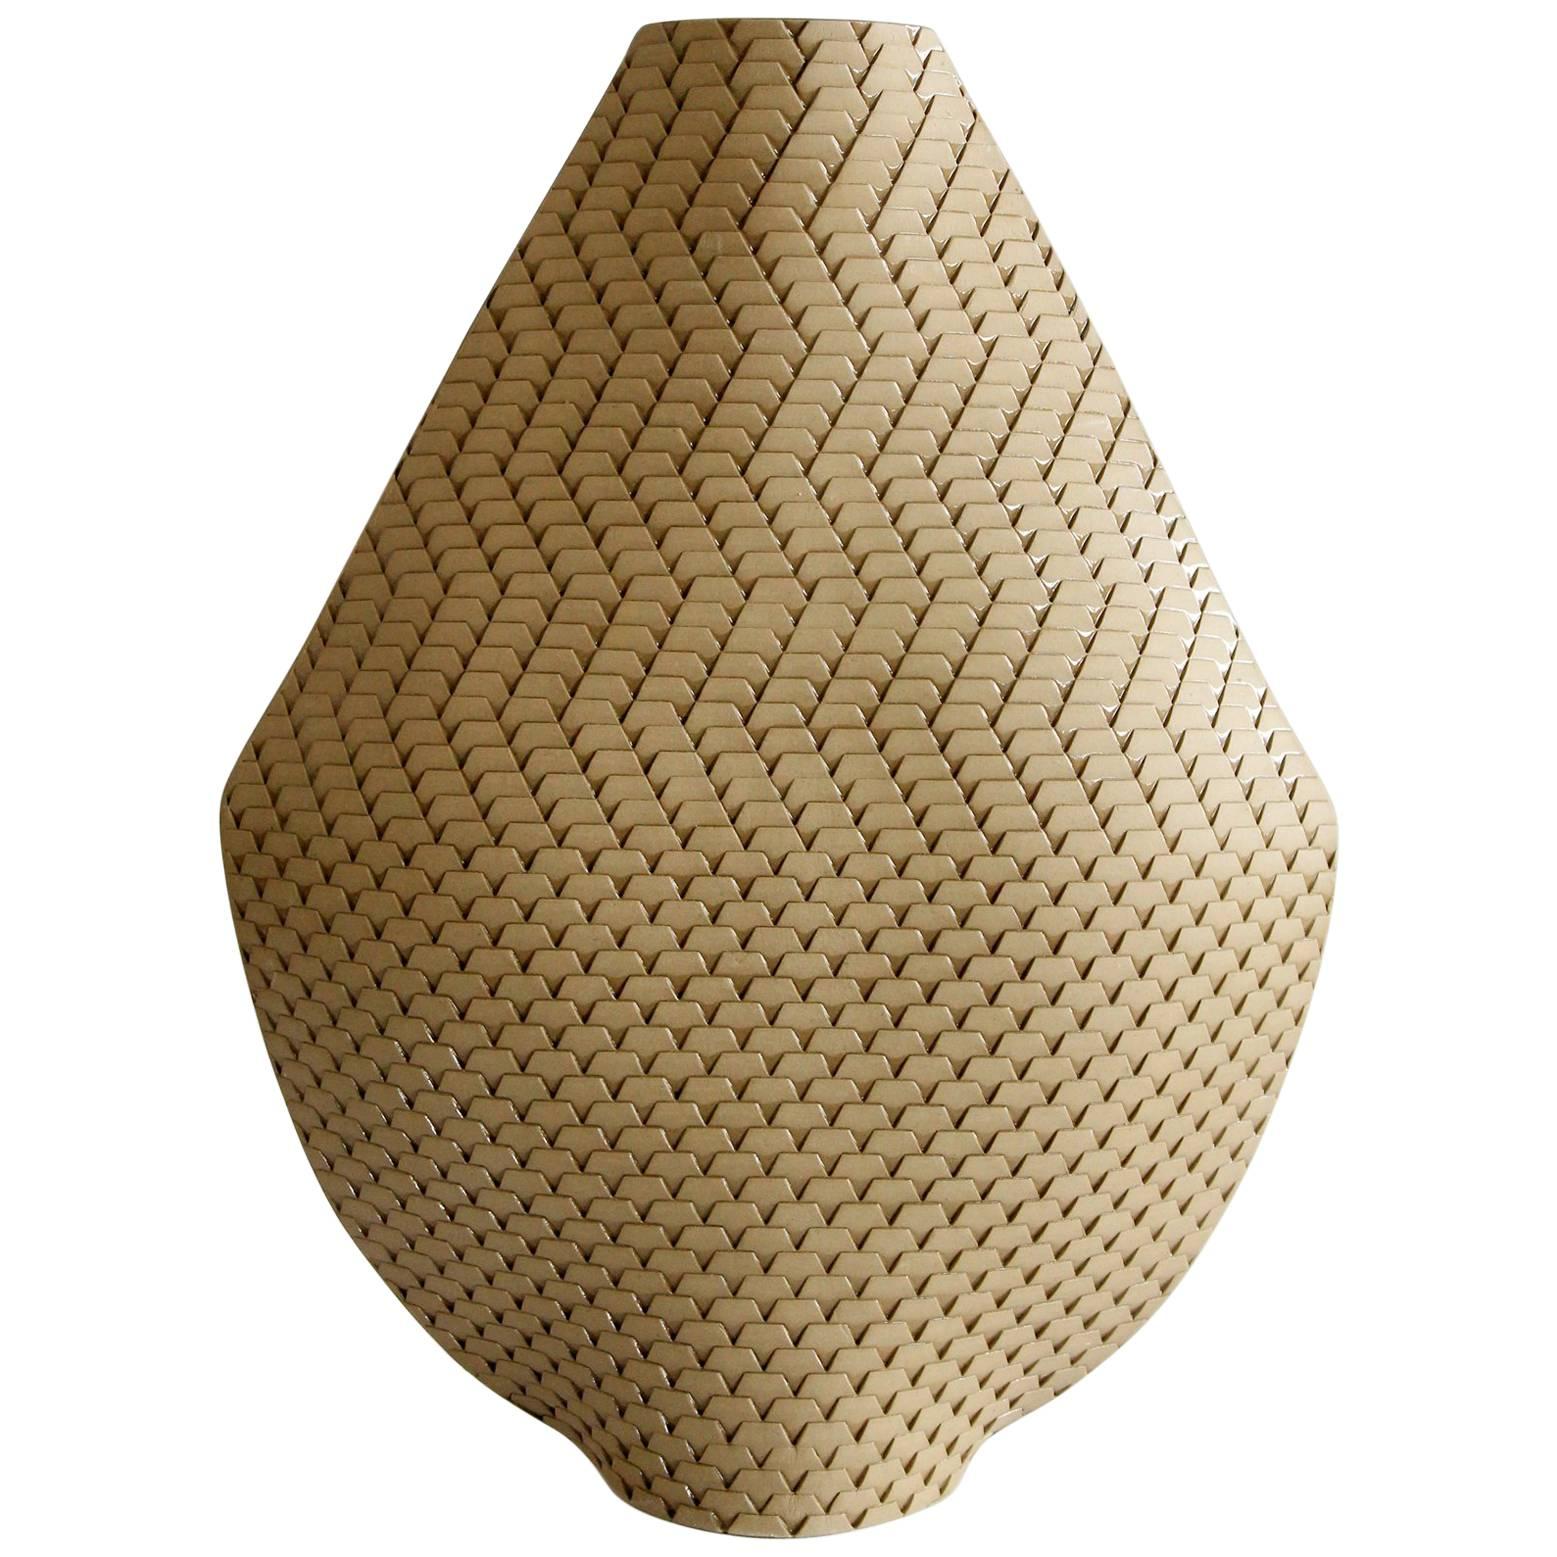 Akan K25 by Hélène Morbu, Limited Edition Handmade Ceramic Vase, France For Sale